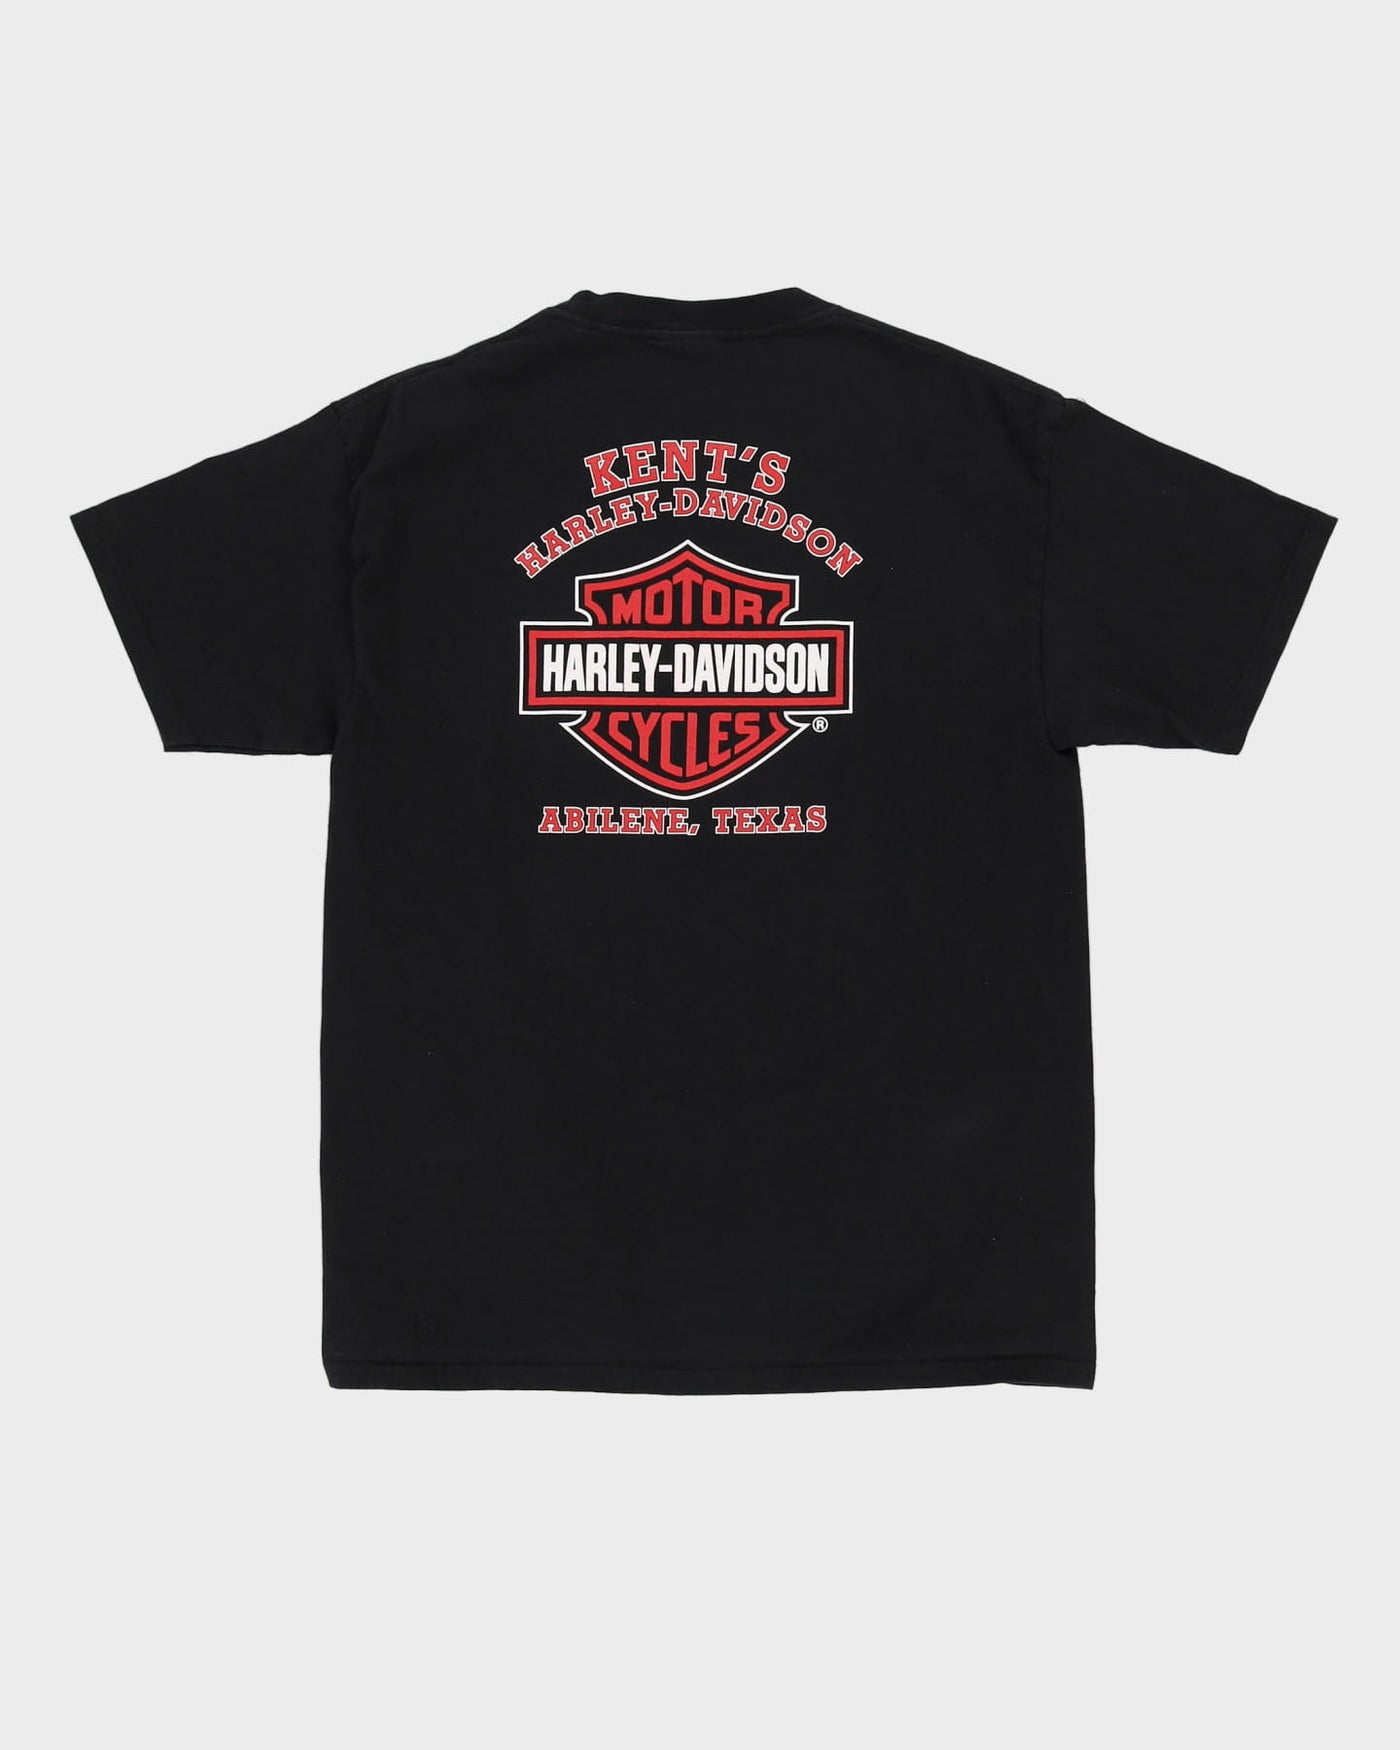 2007 Harley Davidson Black Graphic T-Shirt - M / L